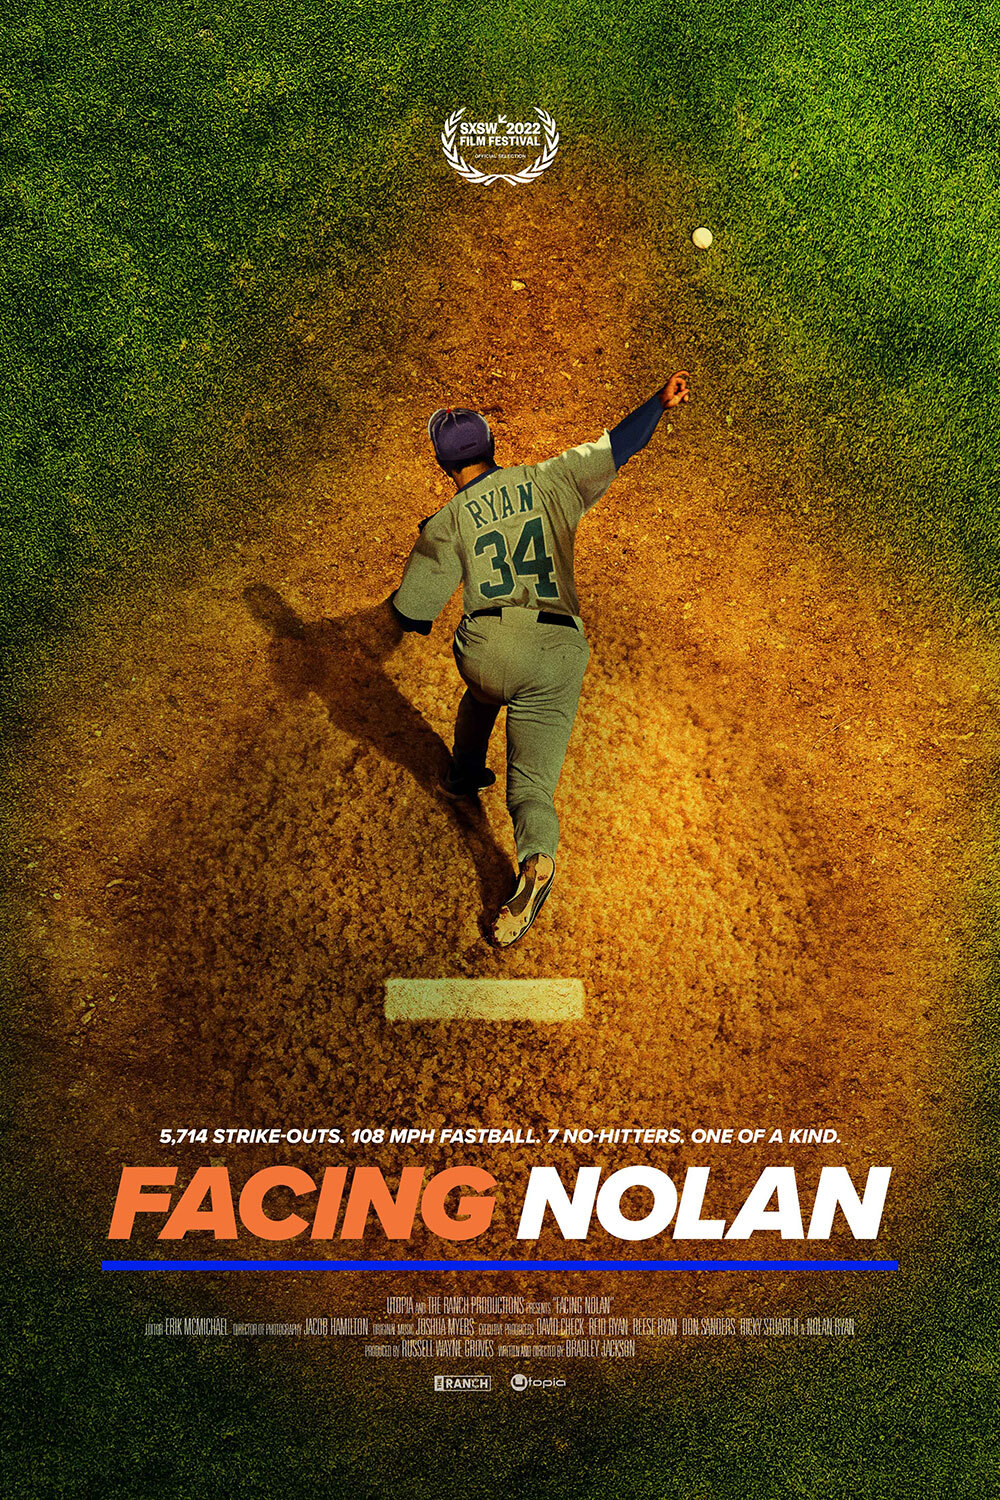 Movie poster for Facing Nolan, baseball player